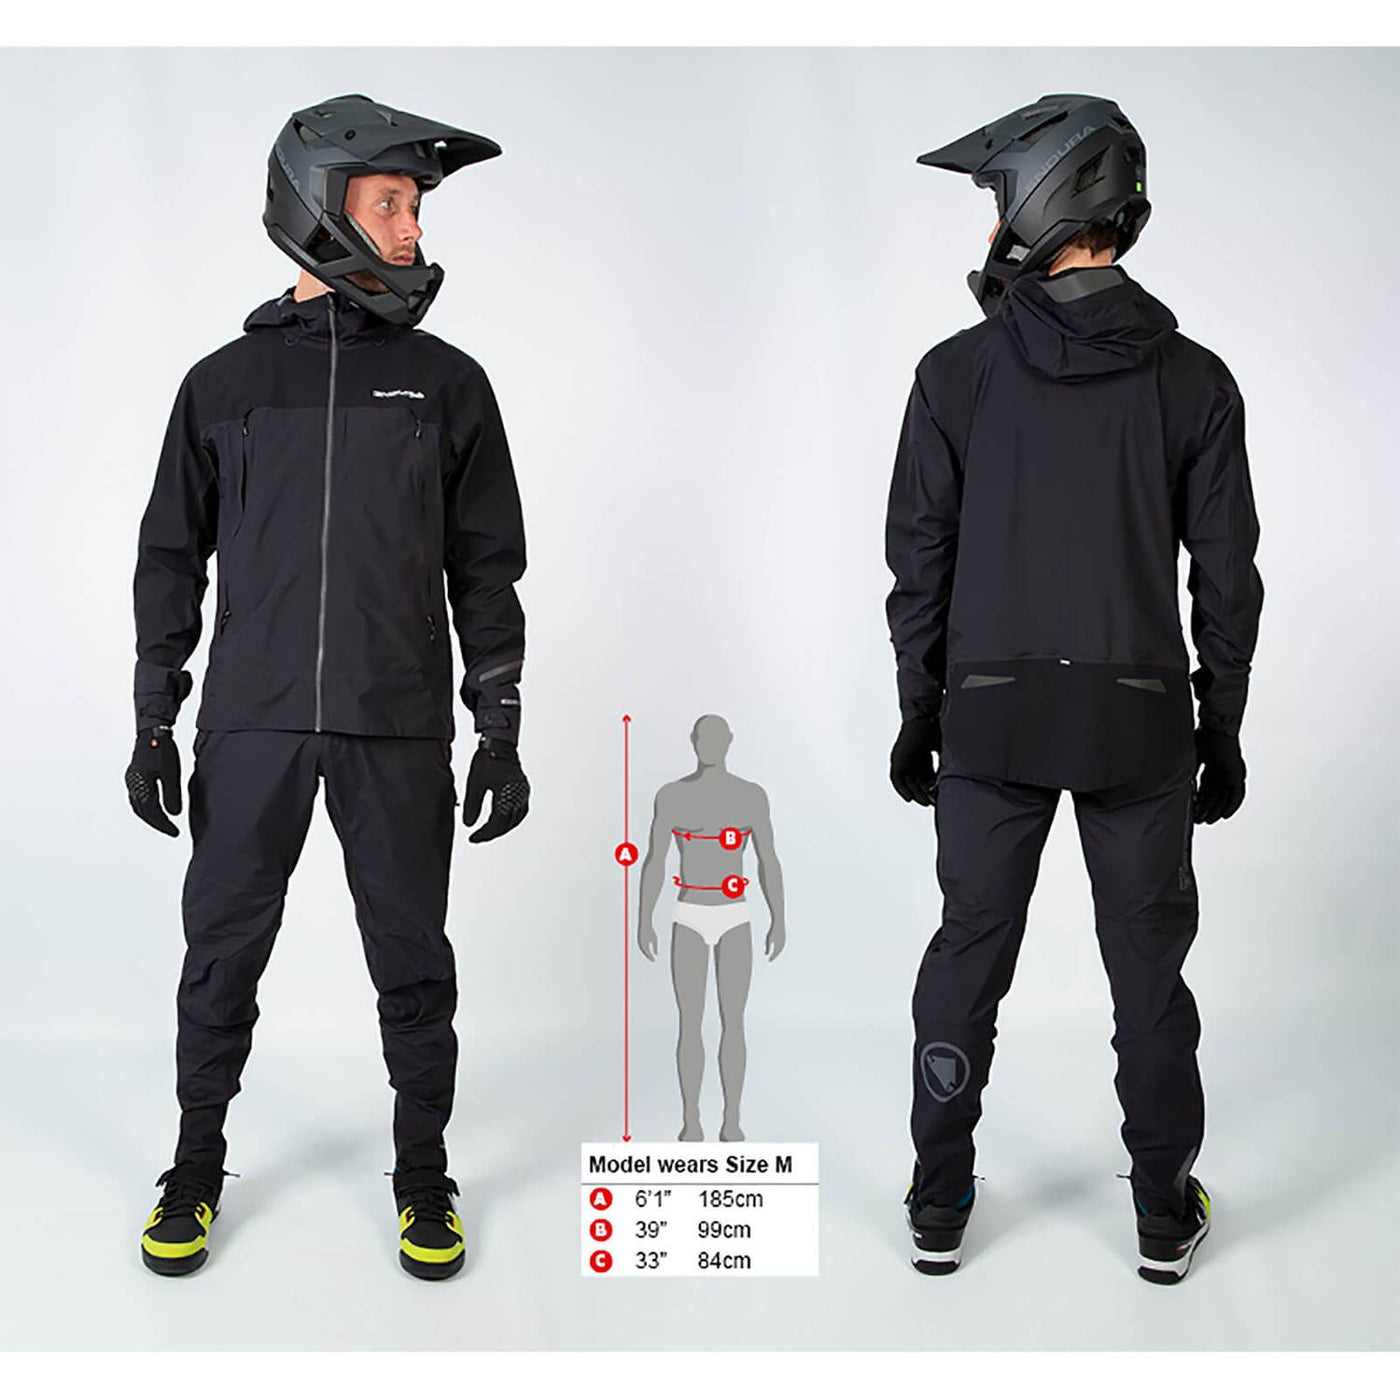 Endura MT500 II Waterproof Jacket